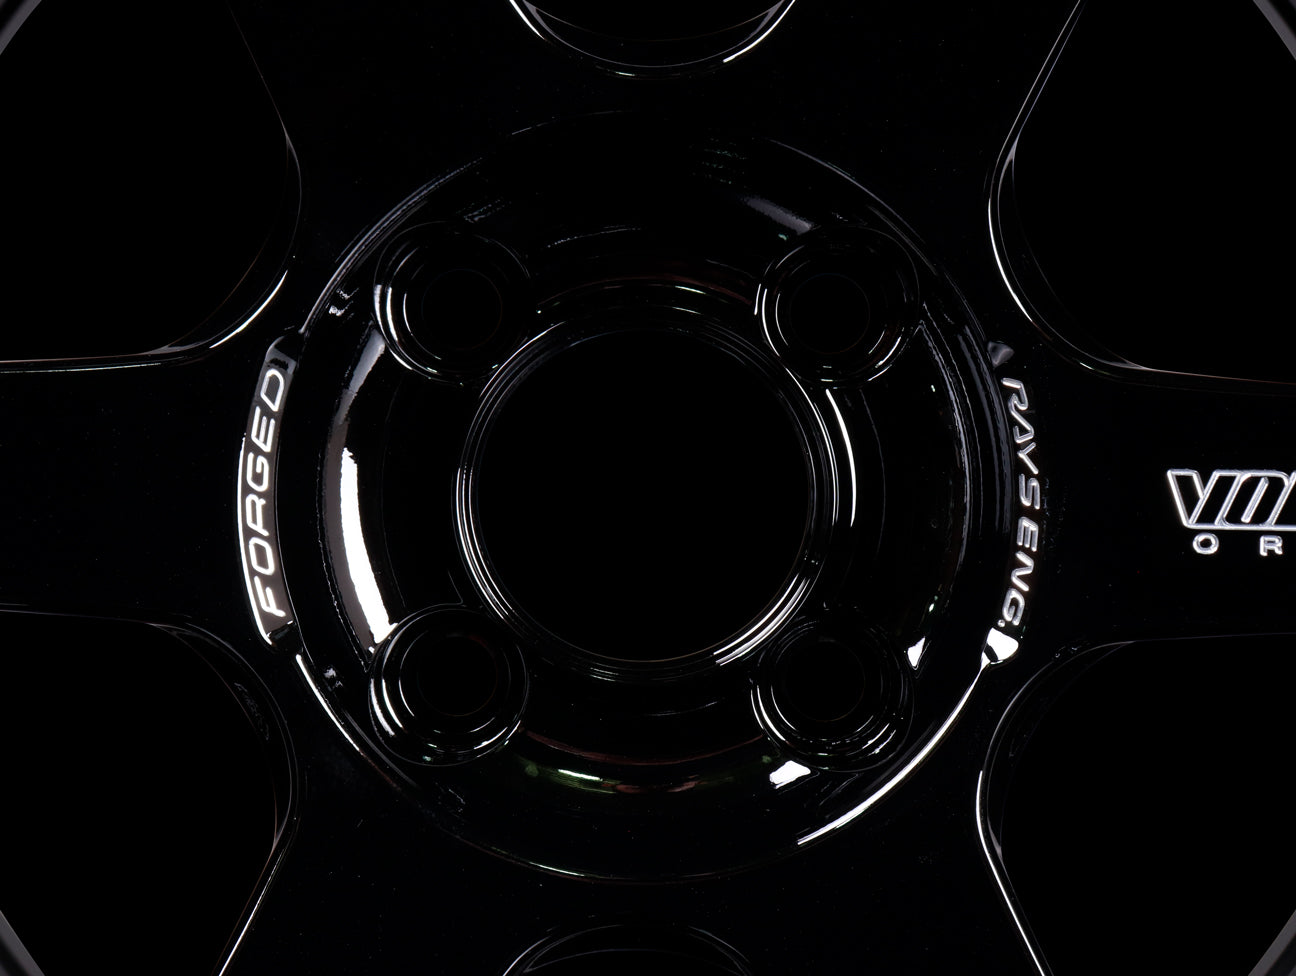 Volk Racing TE37 Sonic Wheels - Gloss Black 16x8 / 4x100 / +35